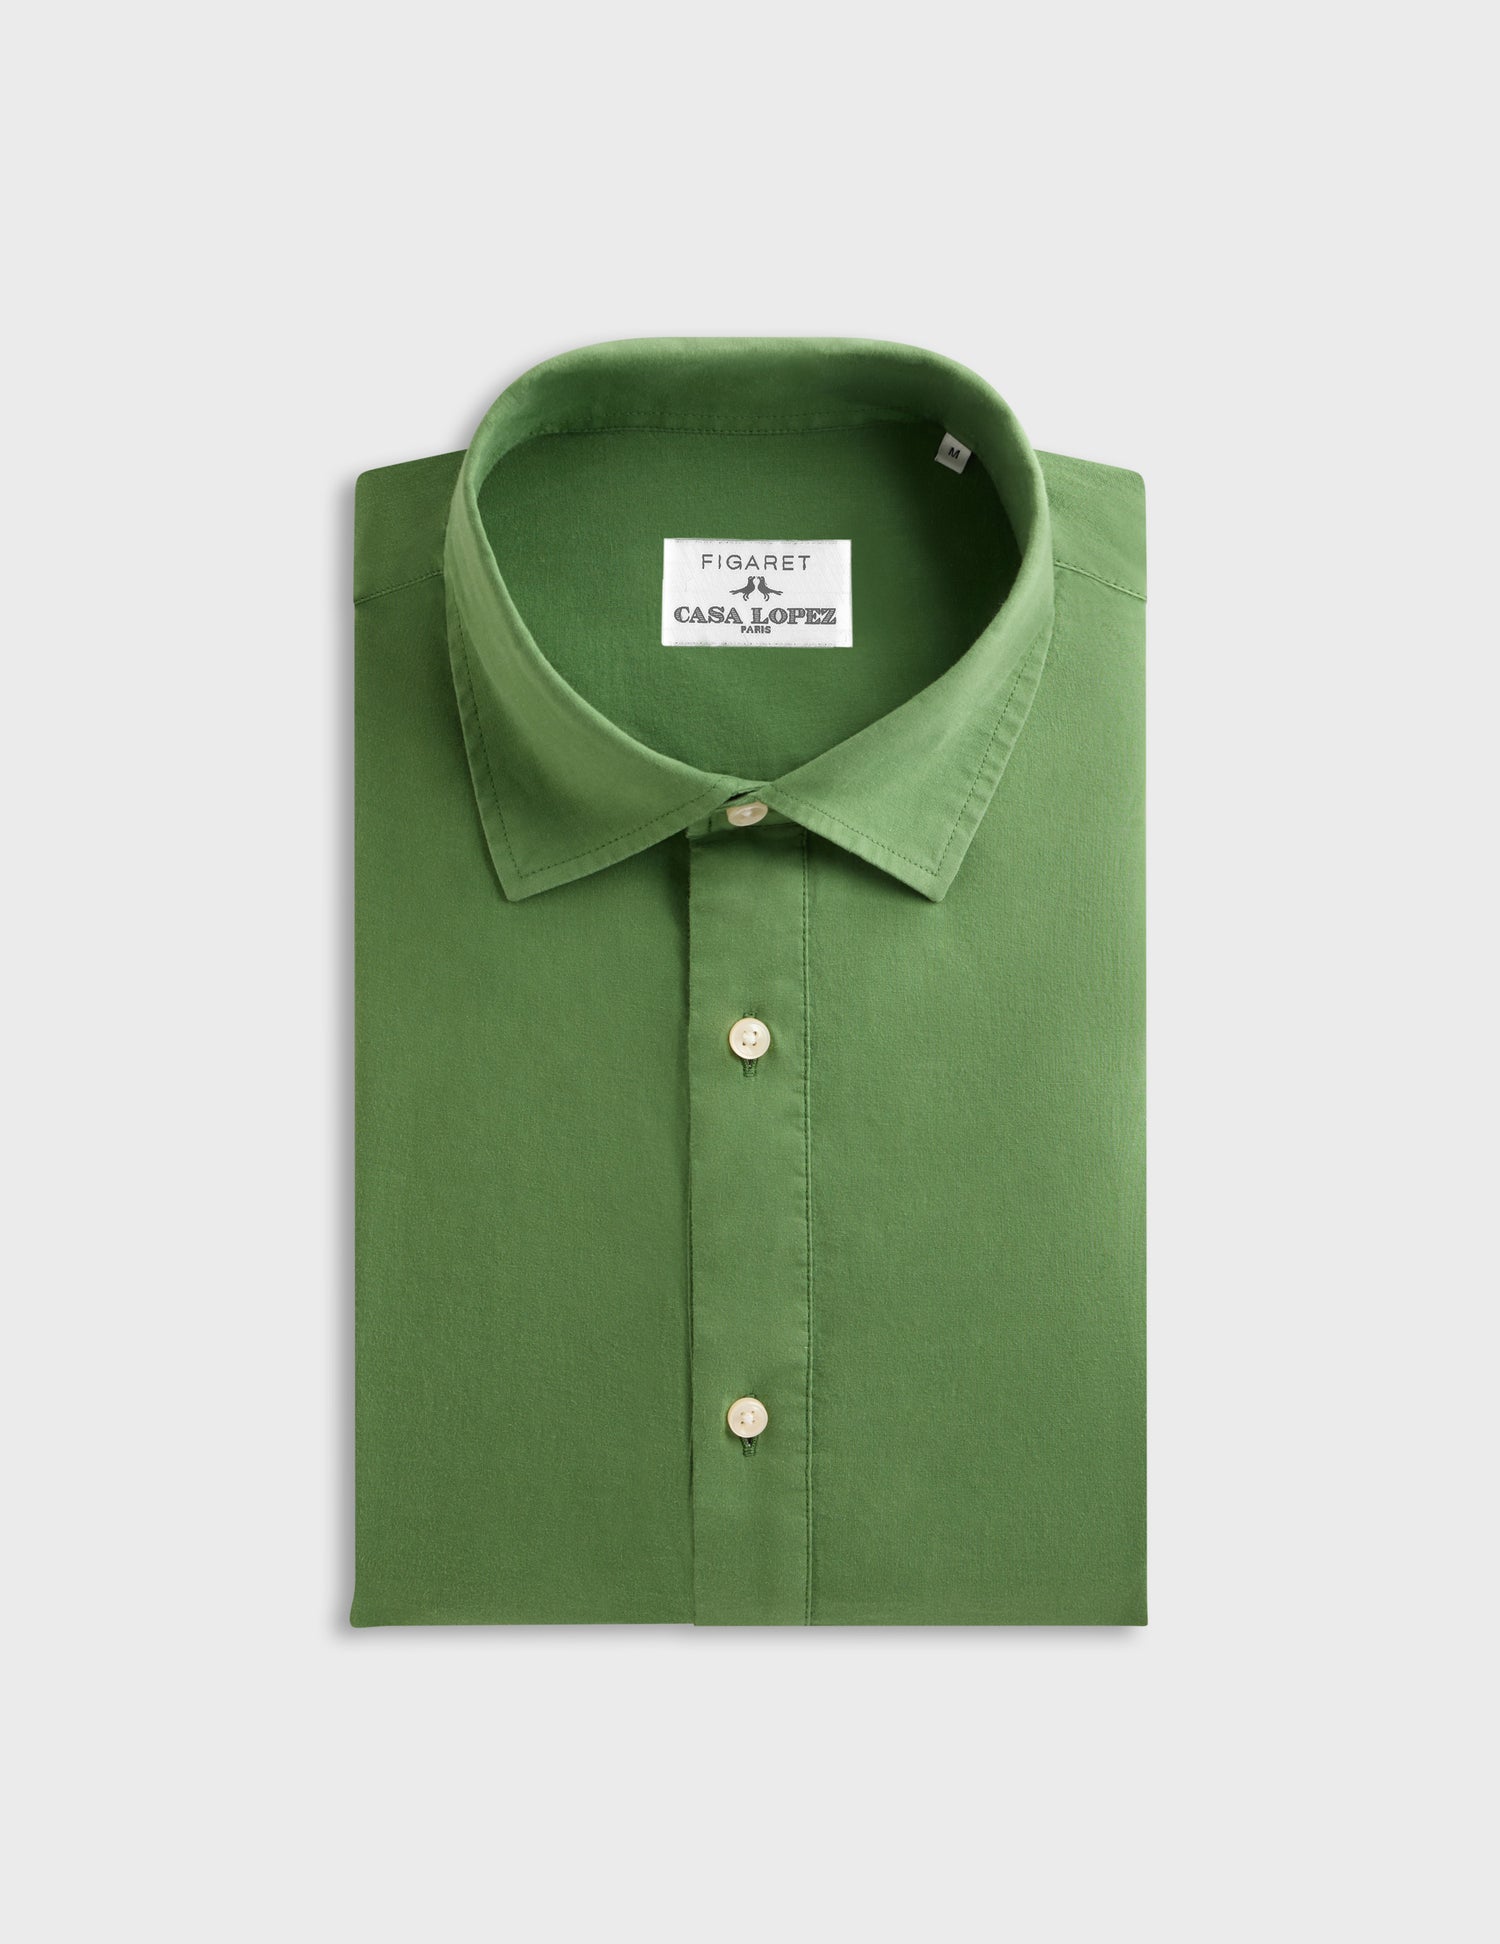 Green Cadaques shirt - Cotton voile - Shirt  Collar#9